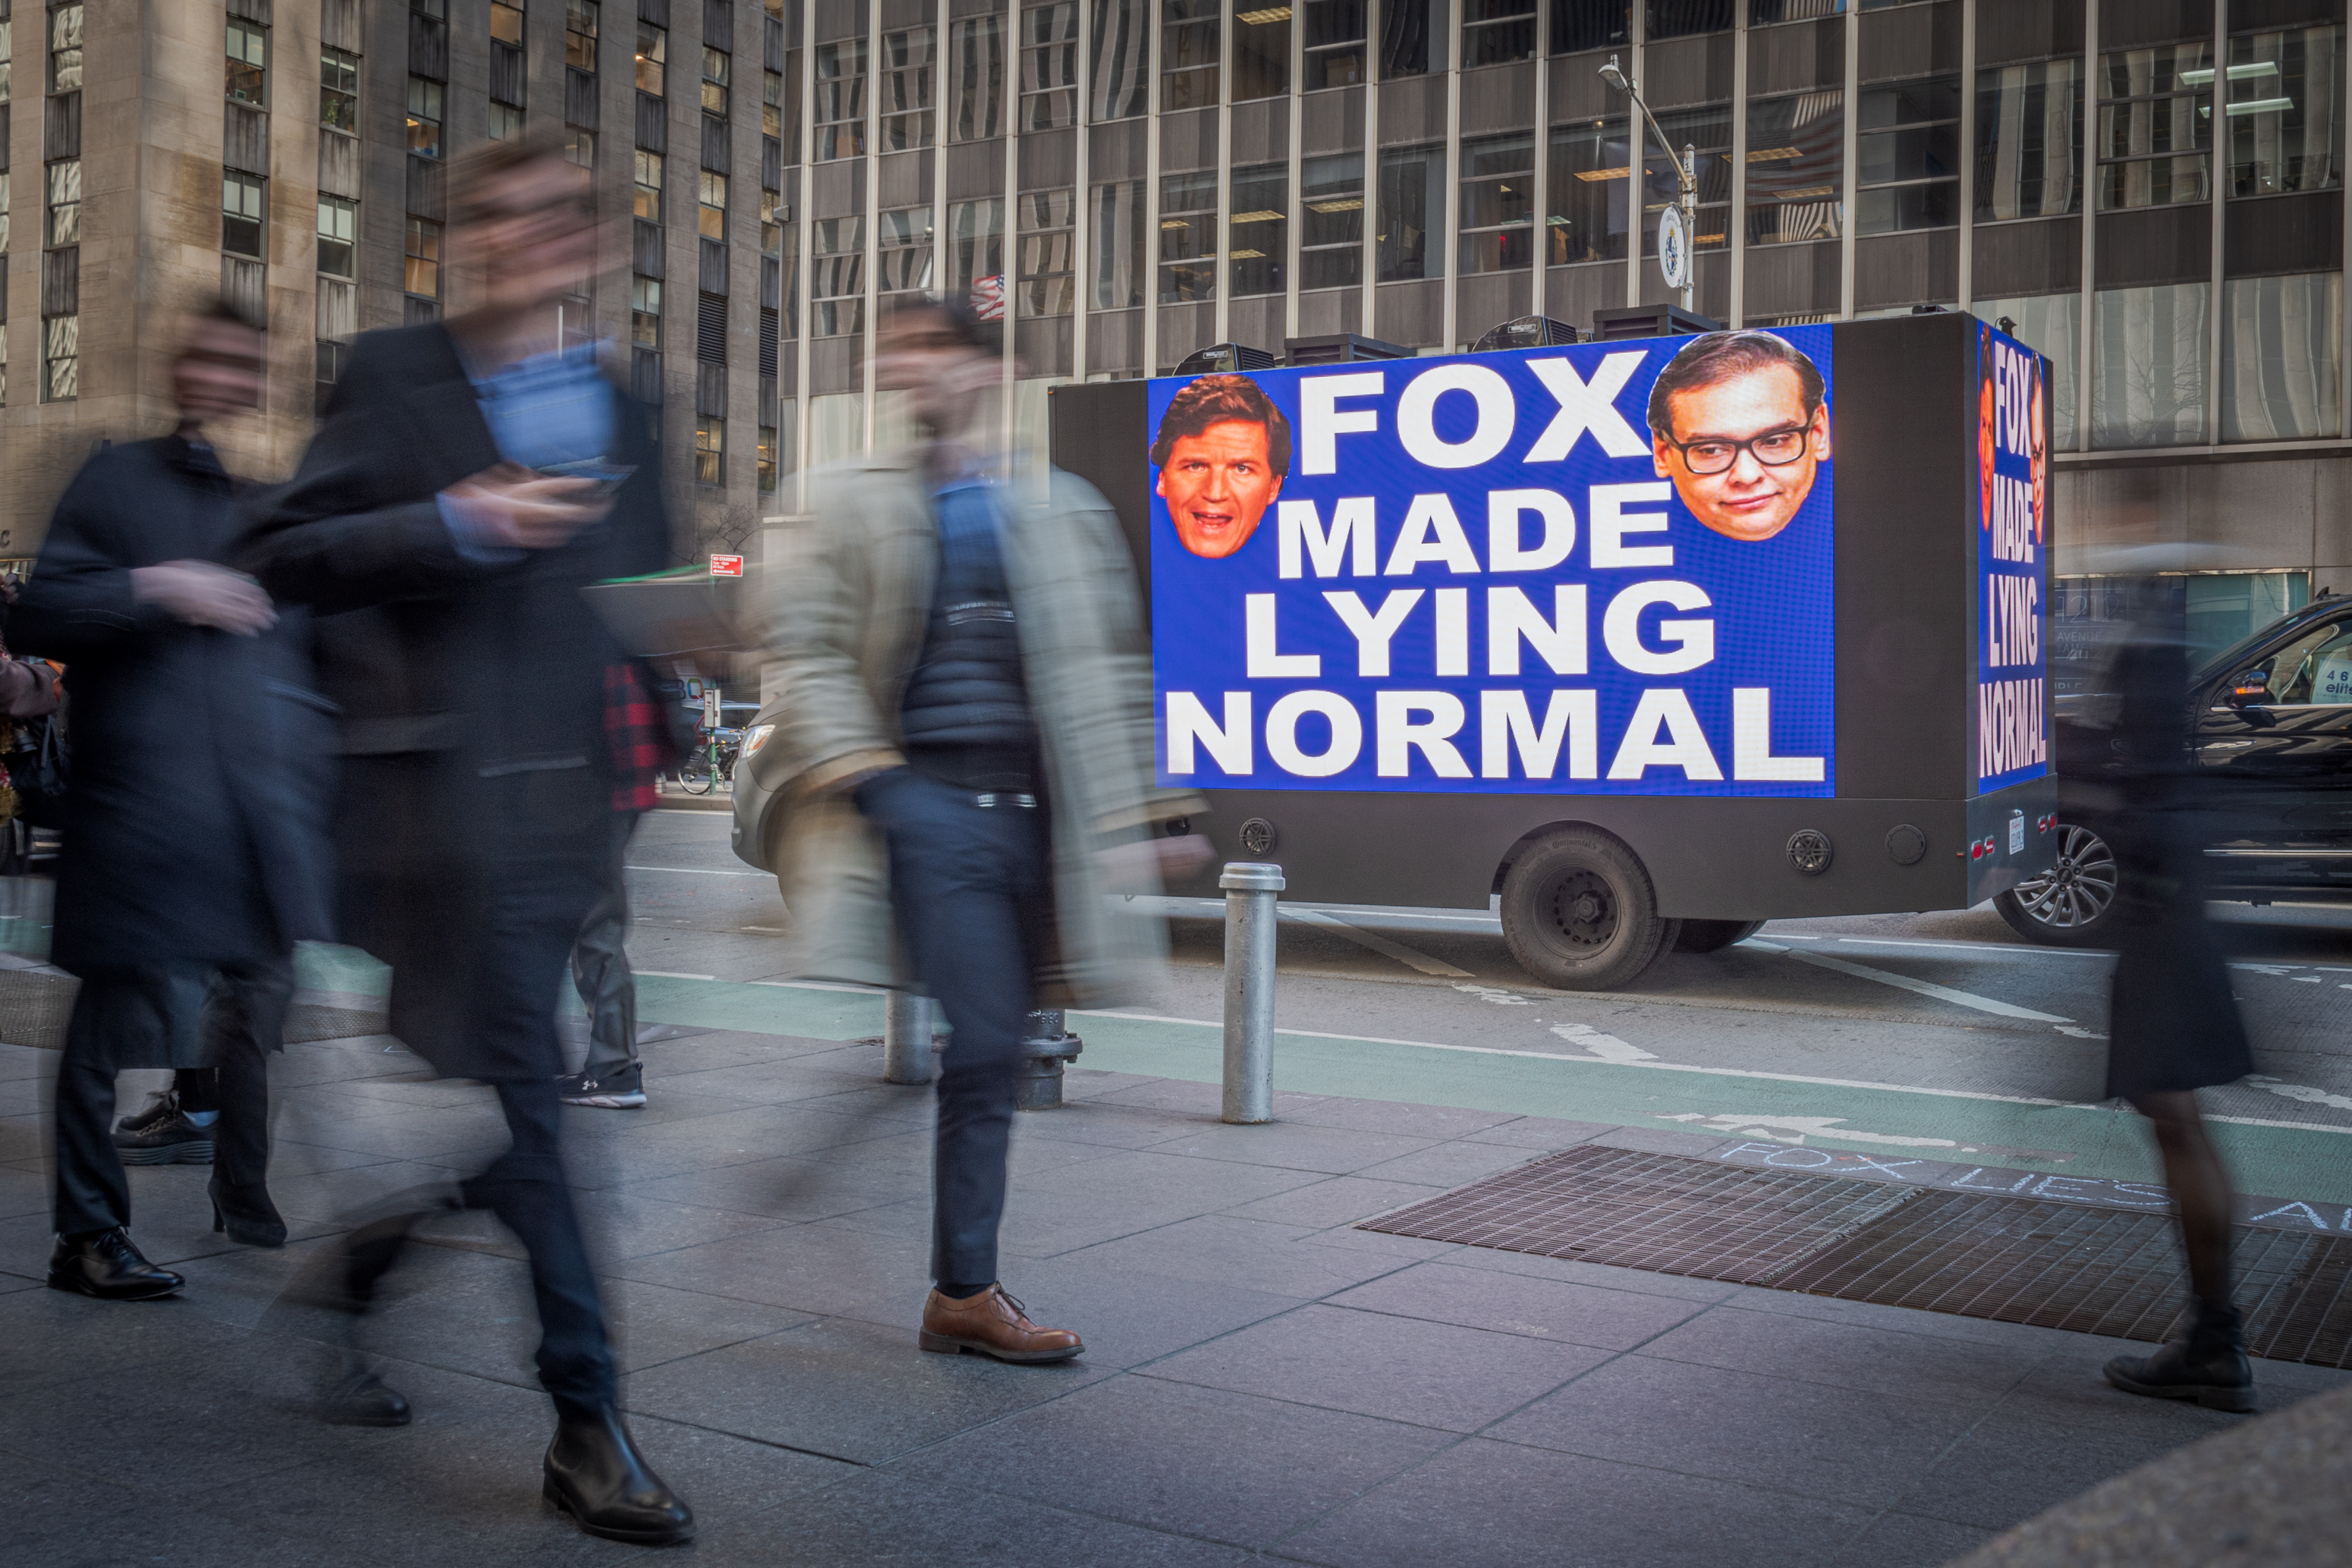 A billboard blasting Fox News in New York